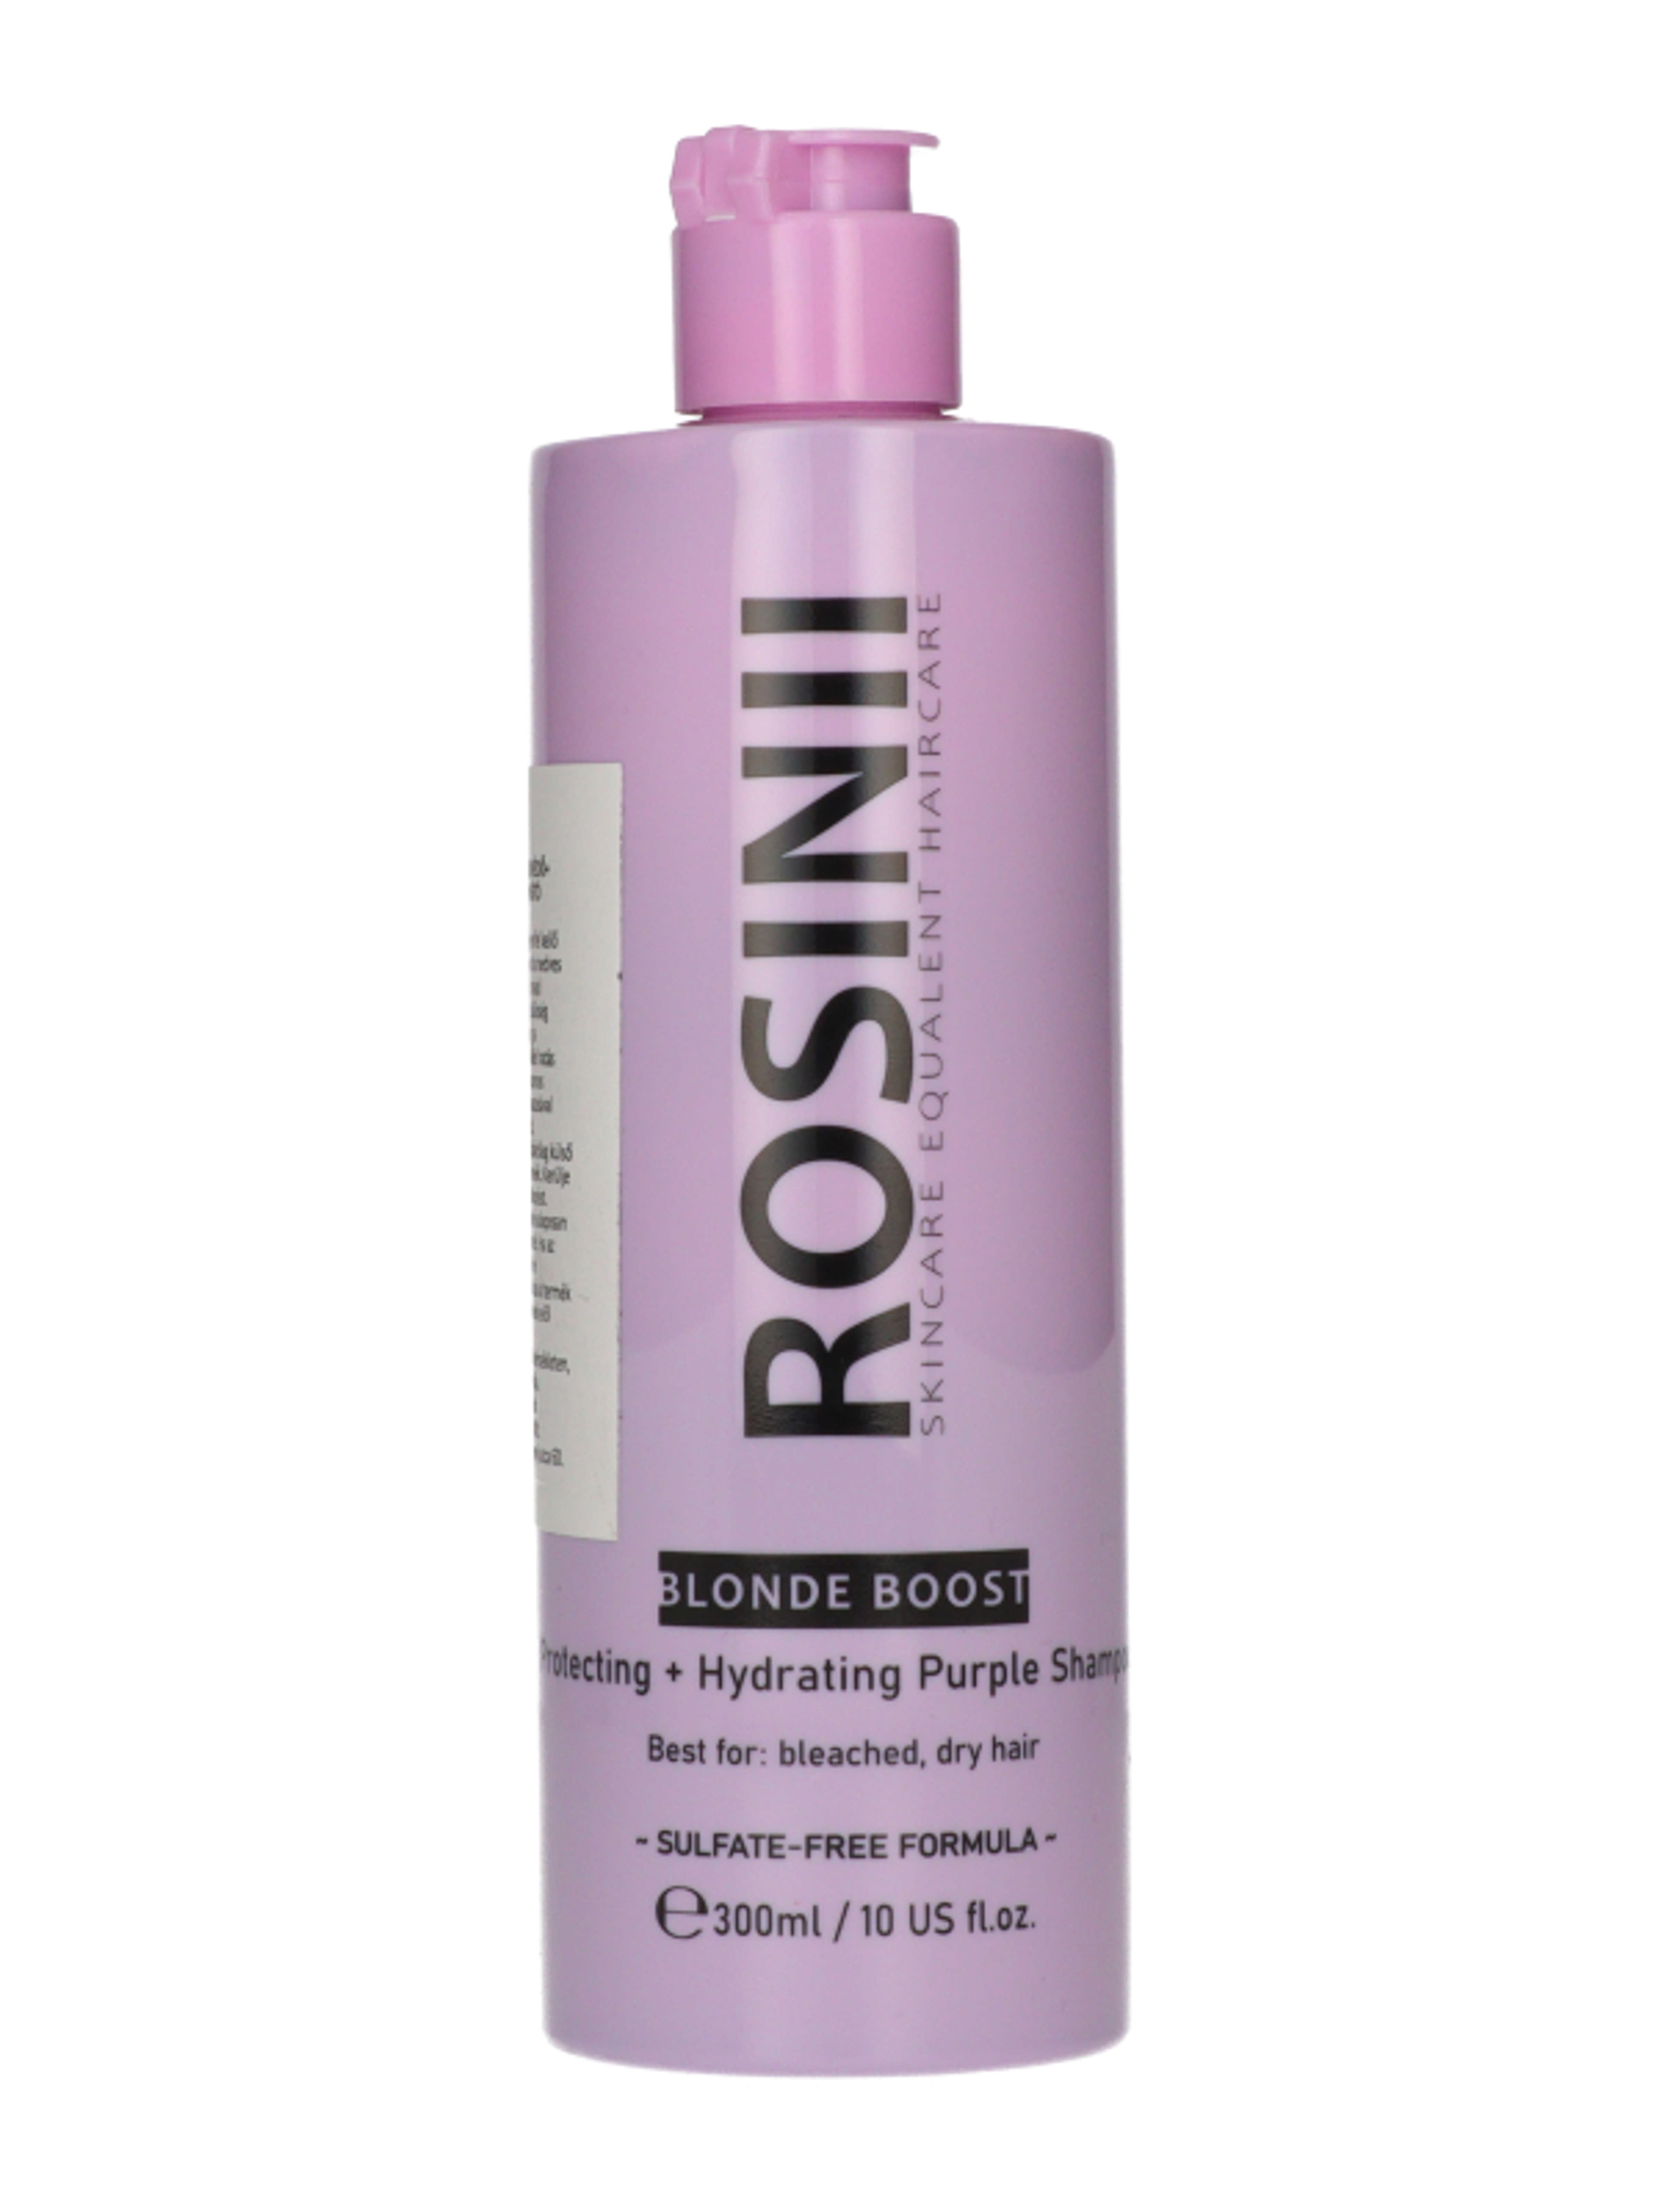 Rosinii Hair Blonde Boost hamvasító sampon - 300 ml